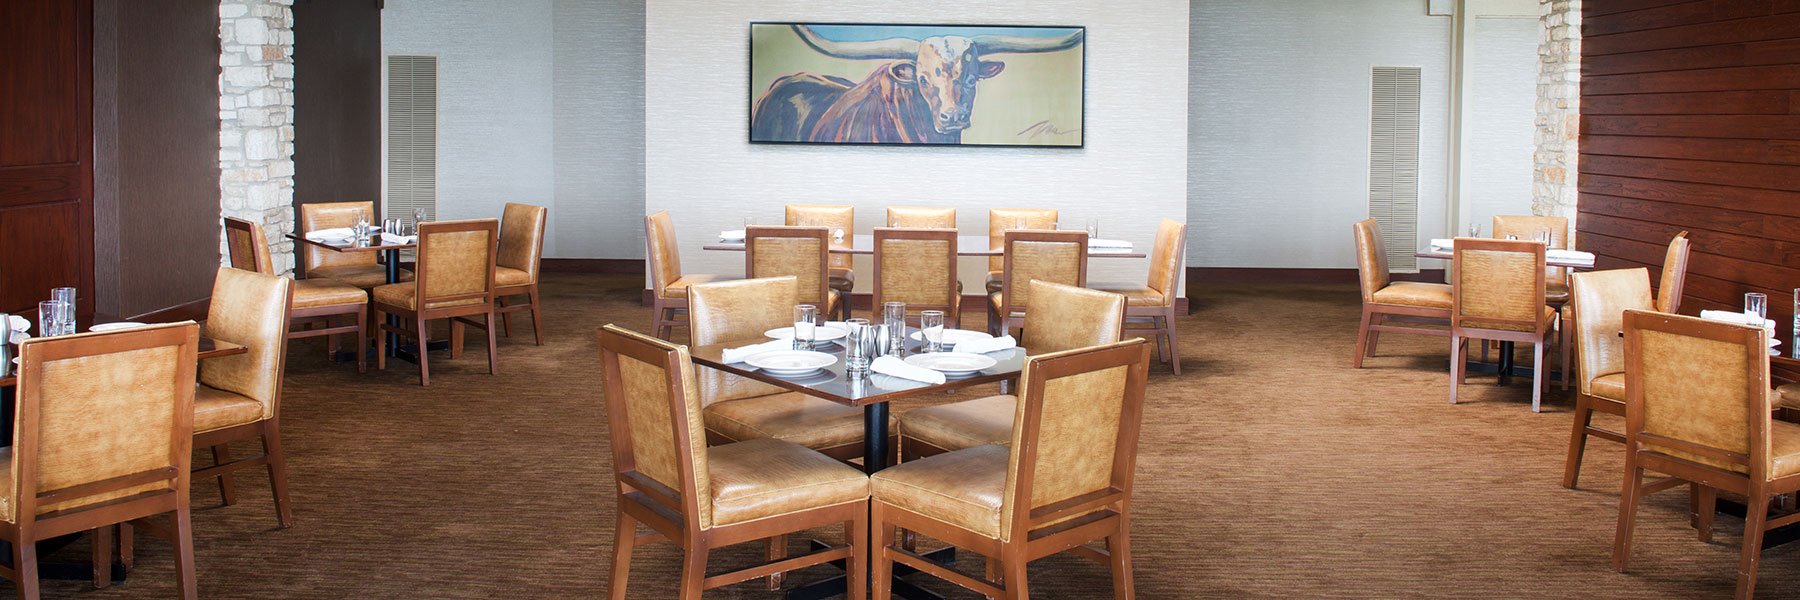 Our Story - TR Restaurant & Bar + Lounge, 101 Lakeway Drive, 78734, Austin, US, TX